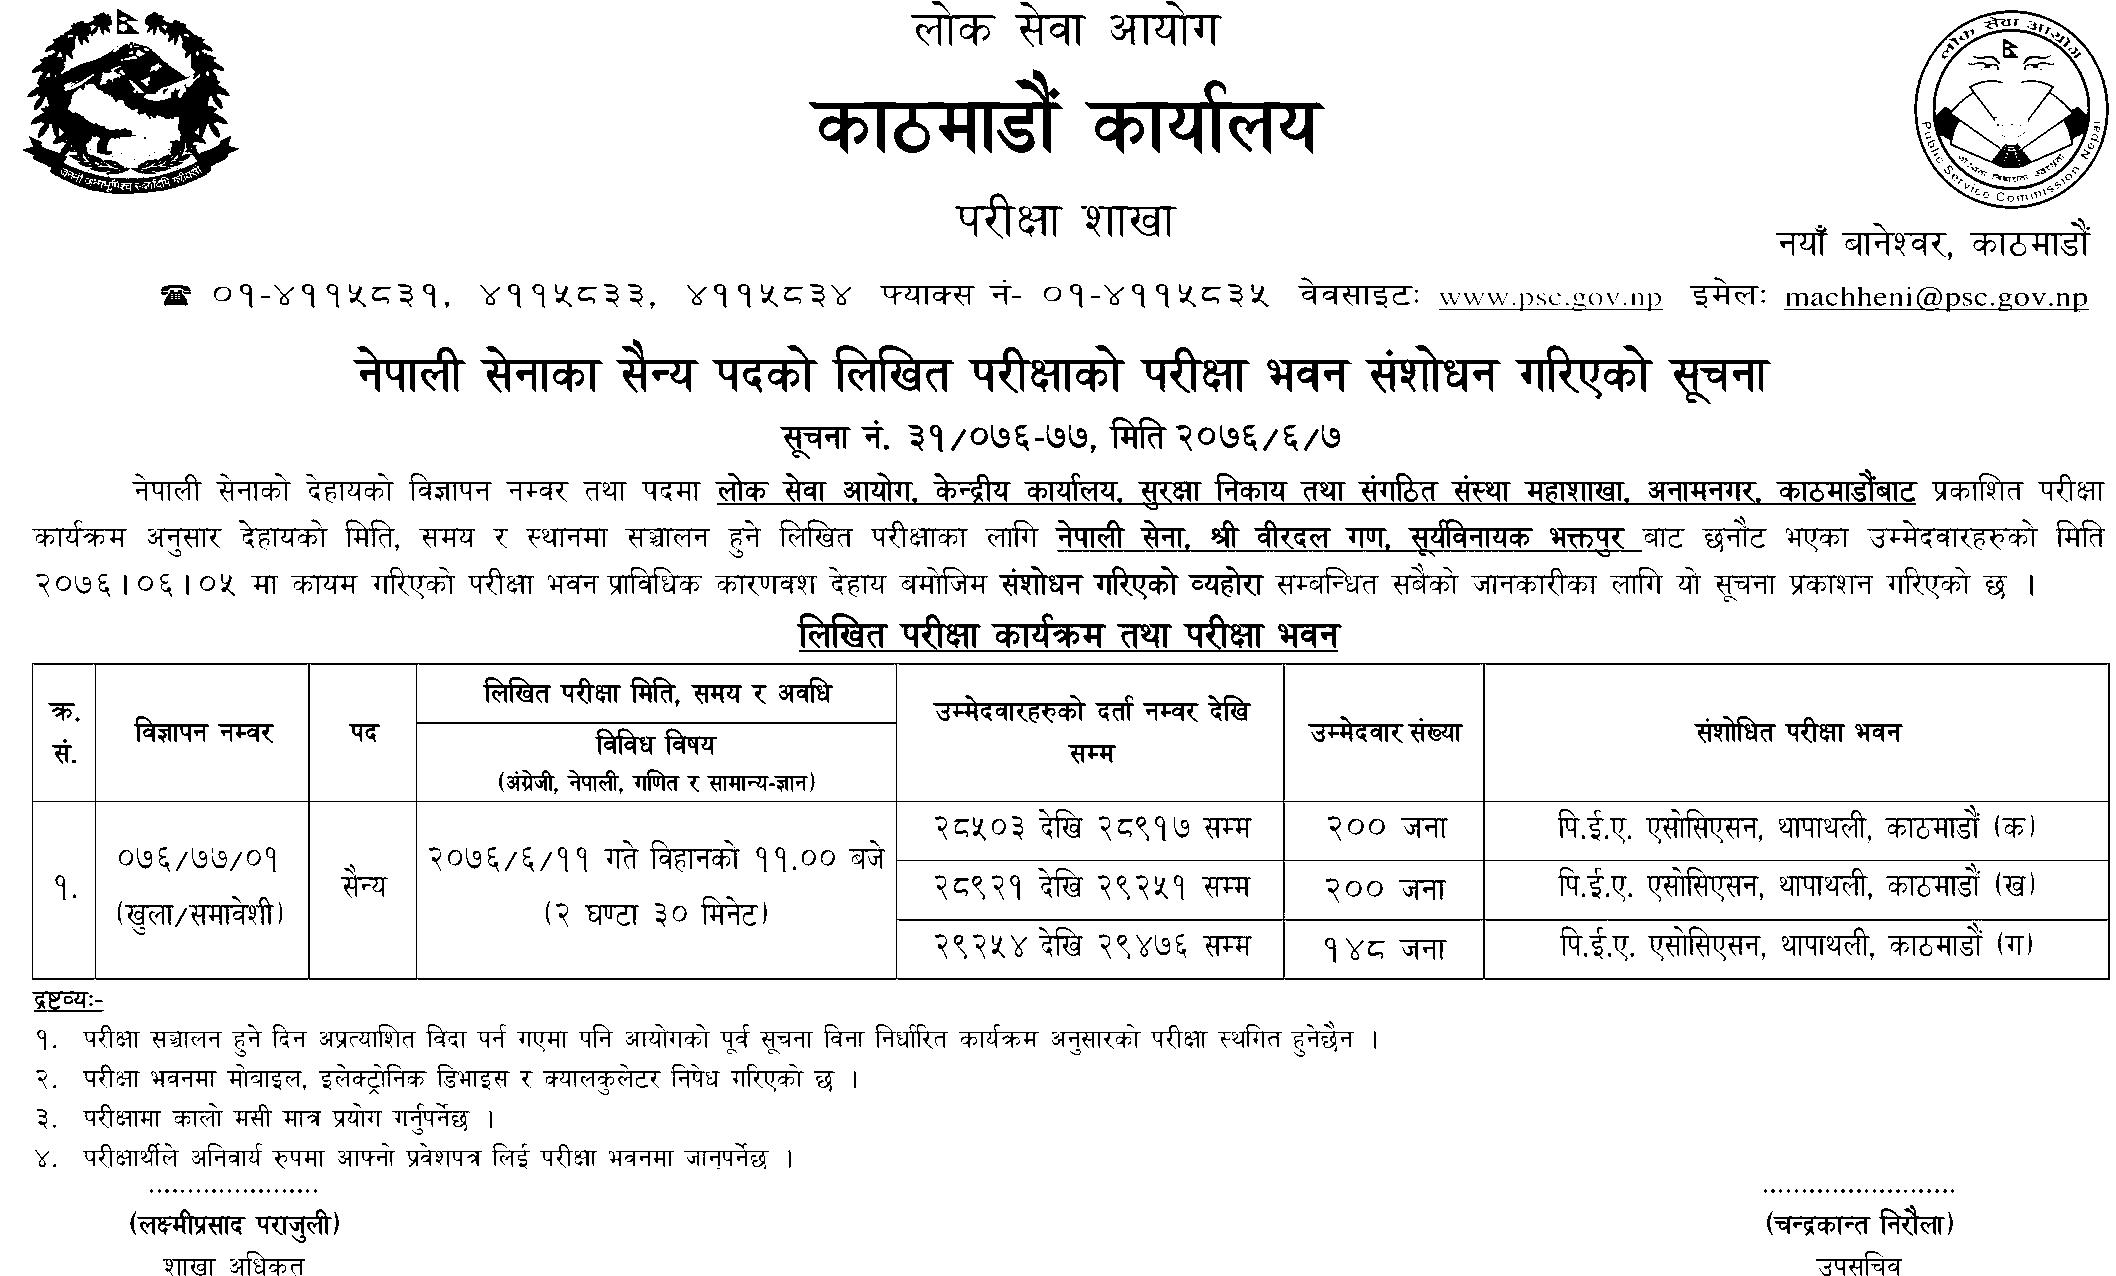 Nepal Army Saine Written Examination Center, Kathmandu